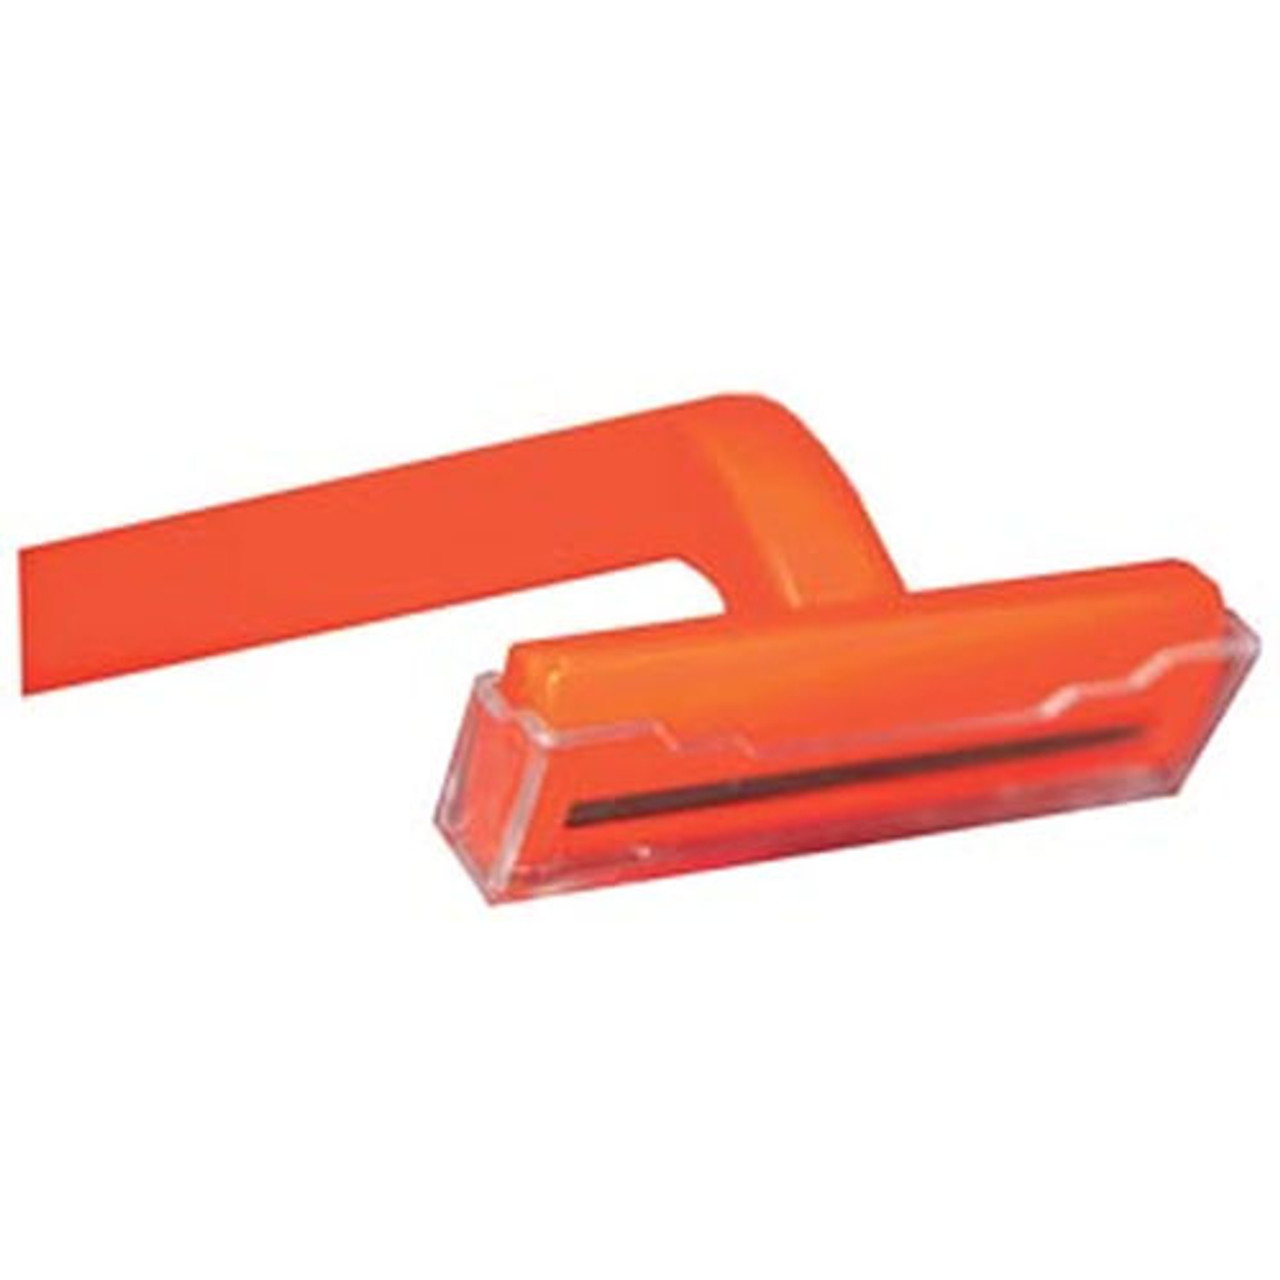 NWI Razor Single Blade, Stainlss Steel, One-Piece Orange Handle,  100/bx, 10 bx/cs